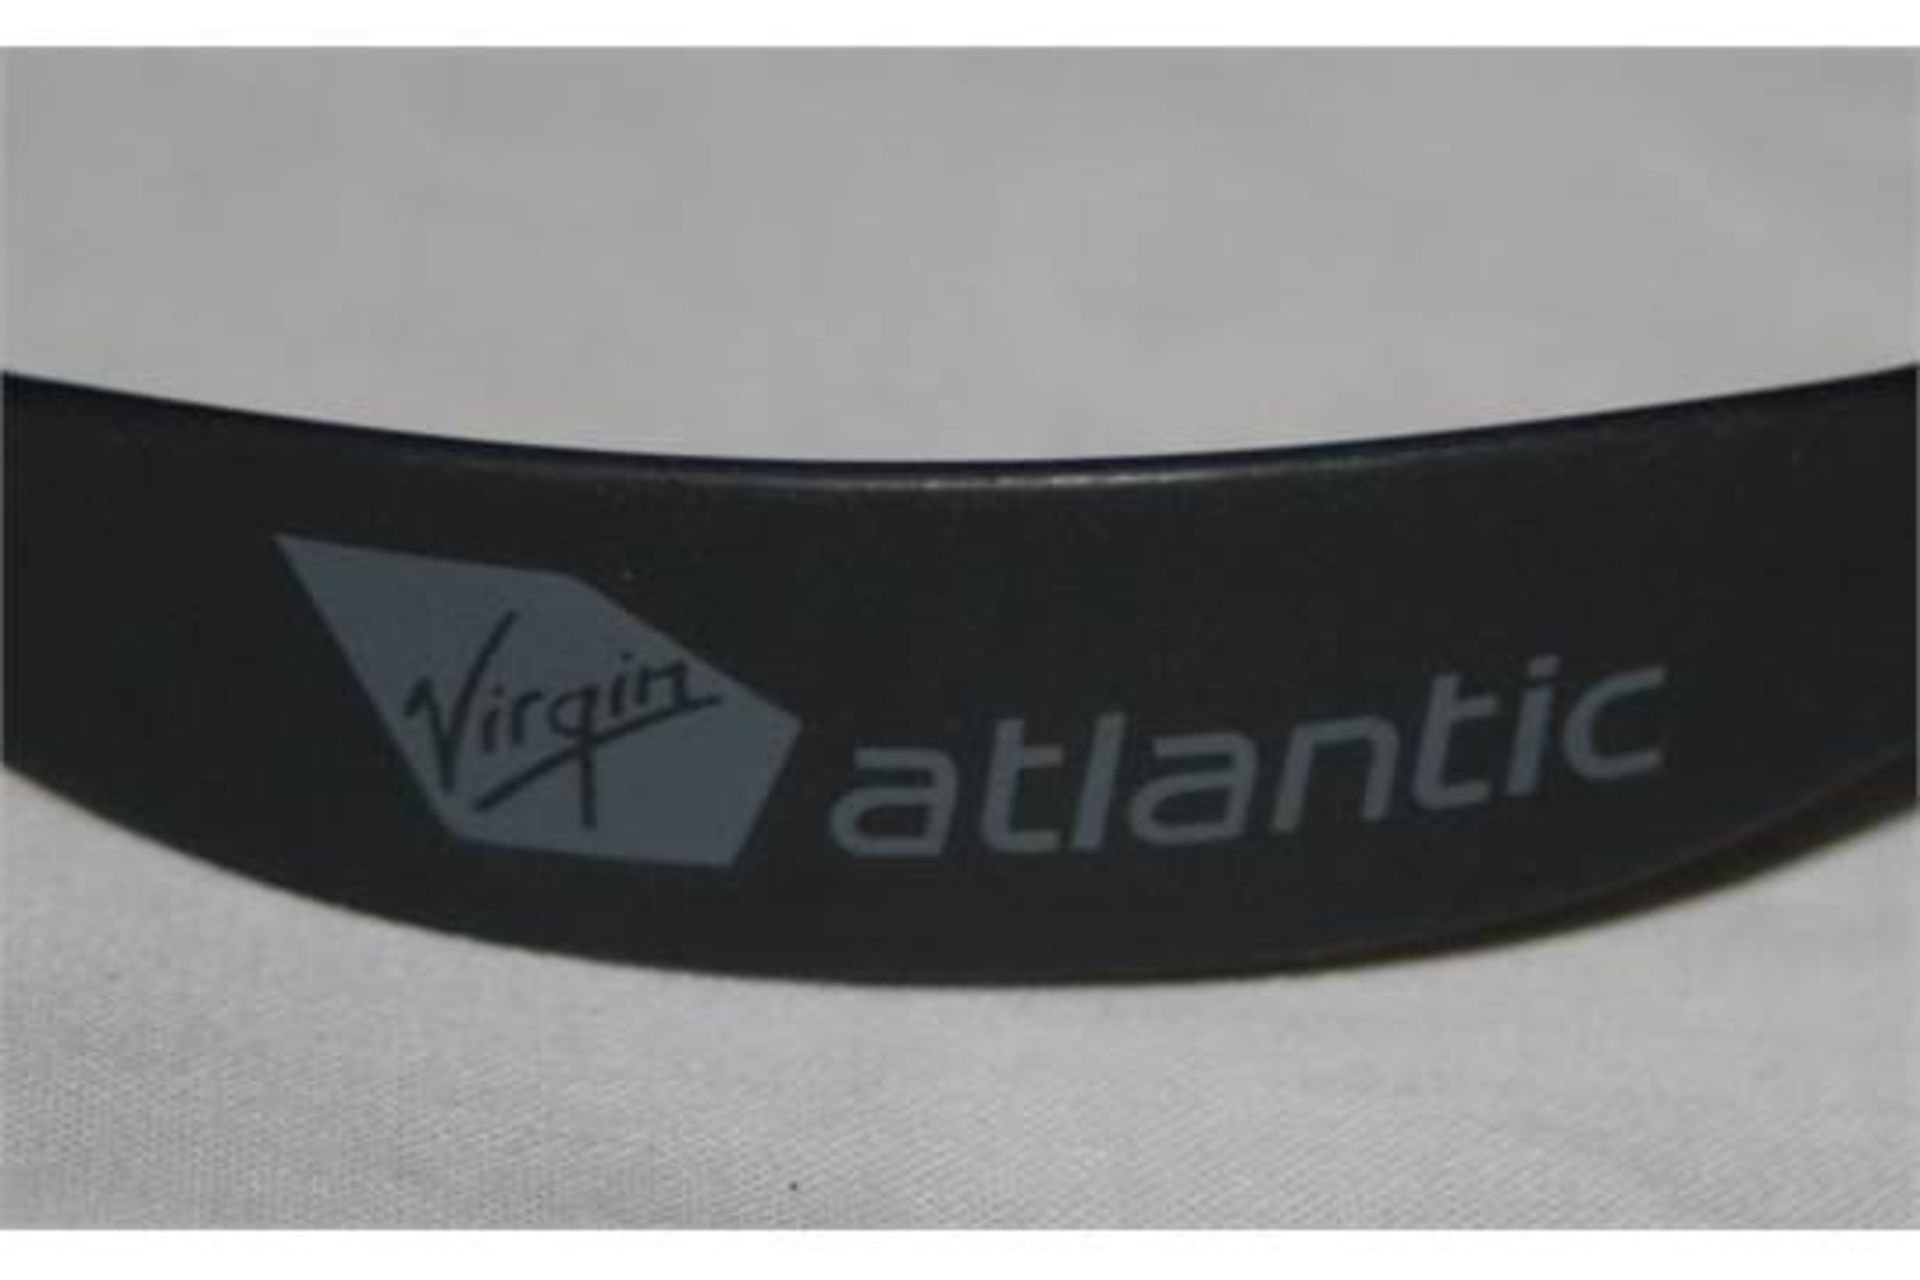 57 x Sets of Virgin Atlantic Earphones / Headphones With 3.5mm Jack Plugs - Brand New Stock - - Image 5 of 5